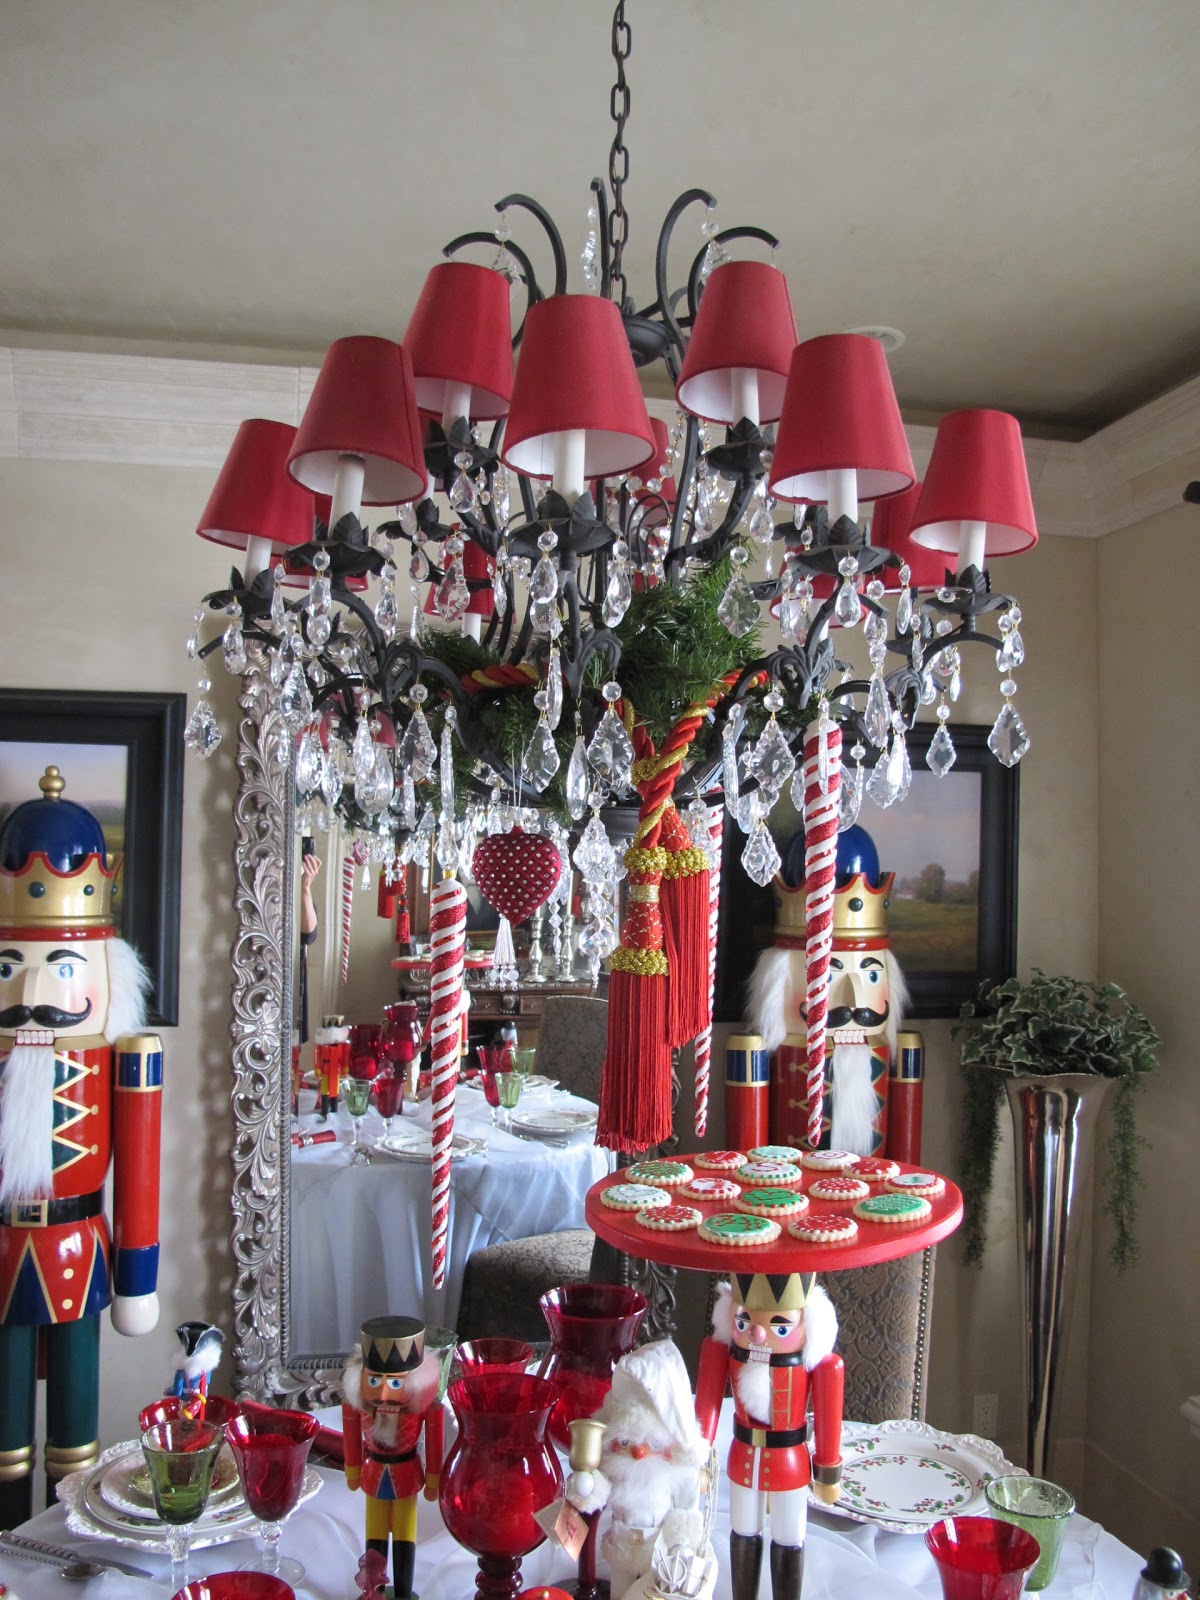 Ceiling fan dressed for Christmas  on Pinterest Ceiling 